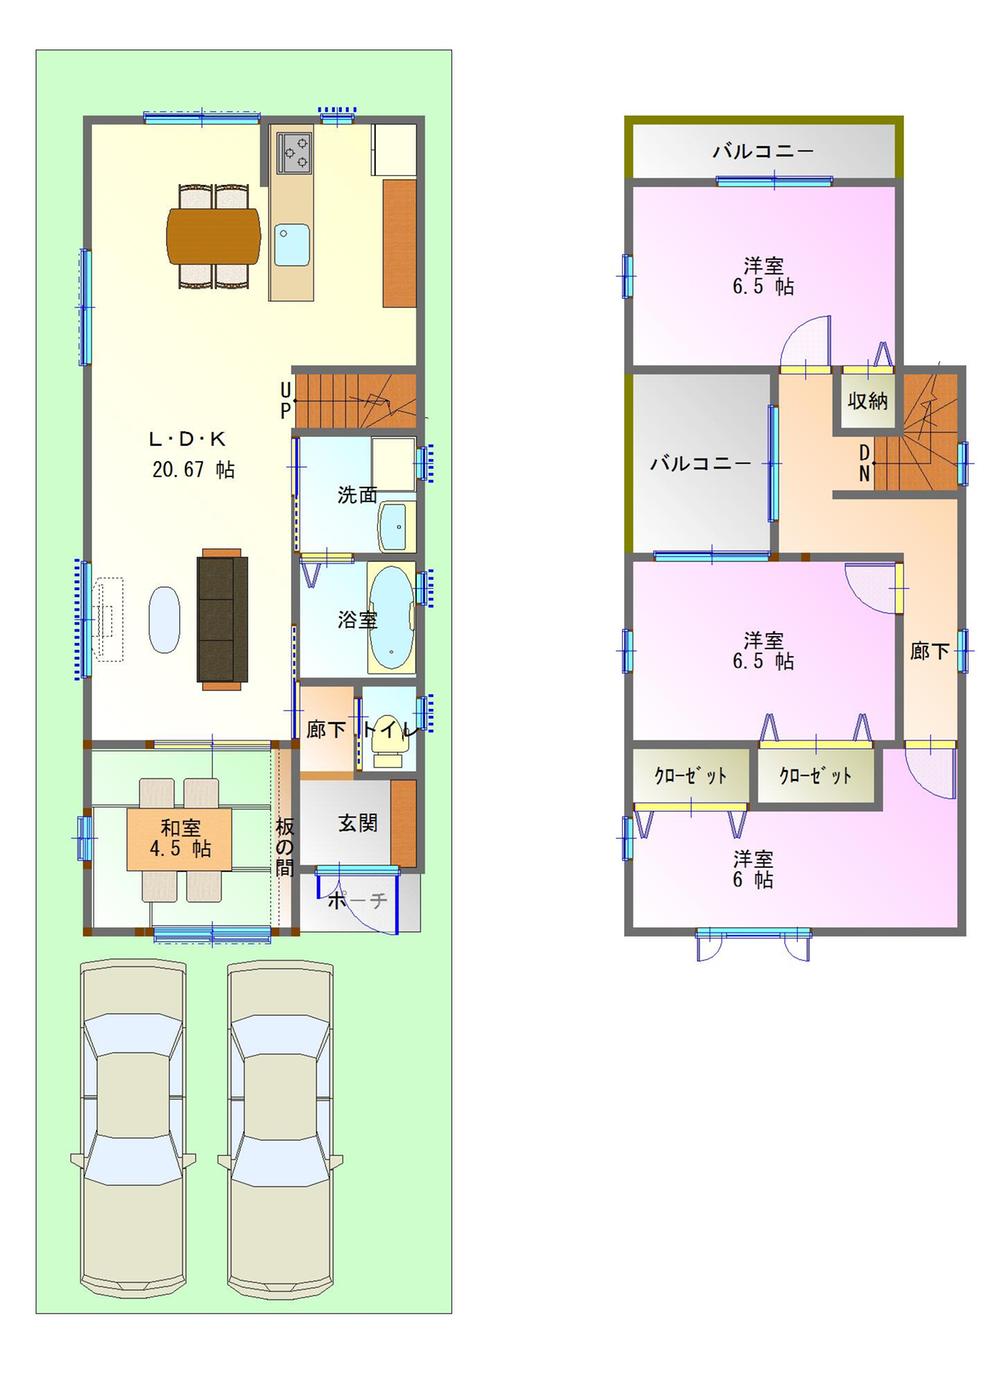 Building plan example (floor plan). Building plan example (No. 3 locations) 4LDK, Land price 20,050,000 yen, Land area 109.15 sq m , Building price 15,750,000 yen, Building area 98.28 sq m